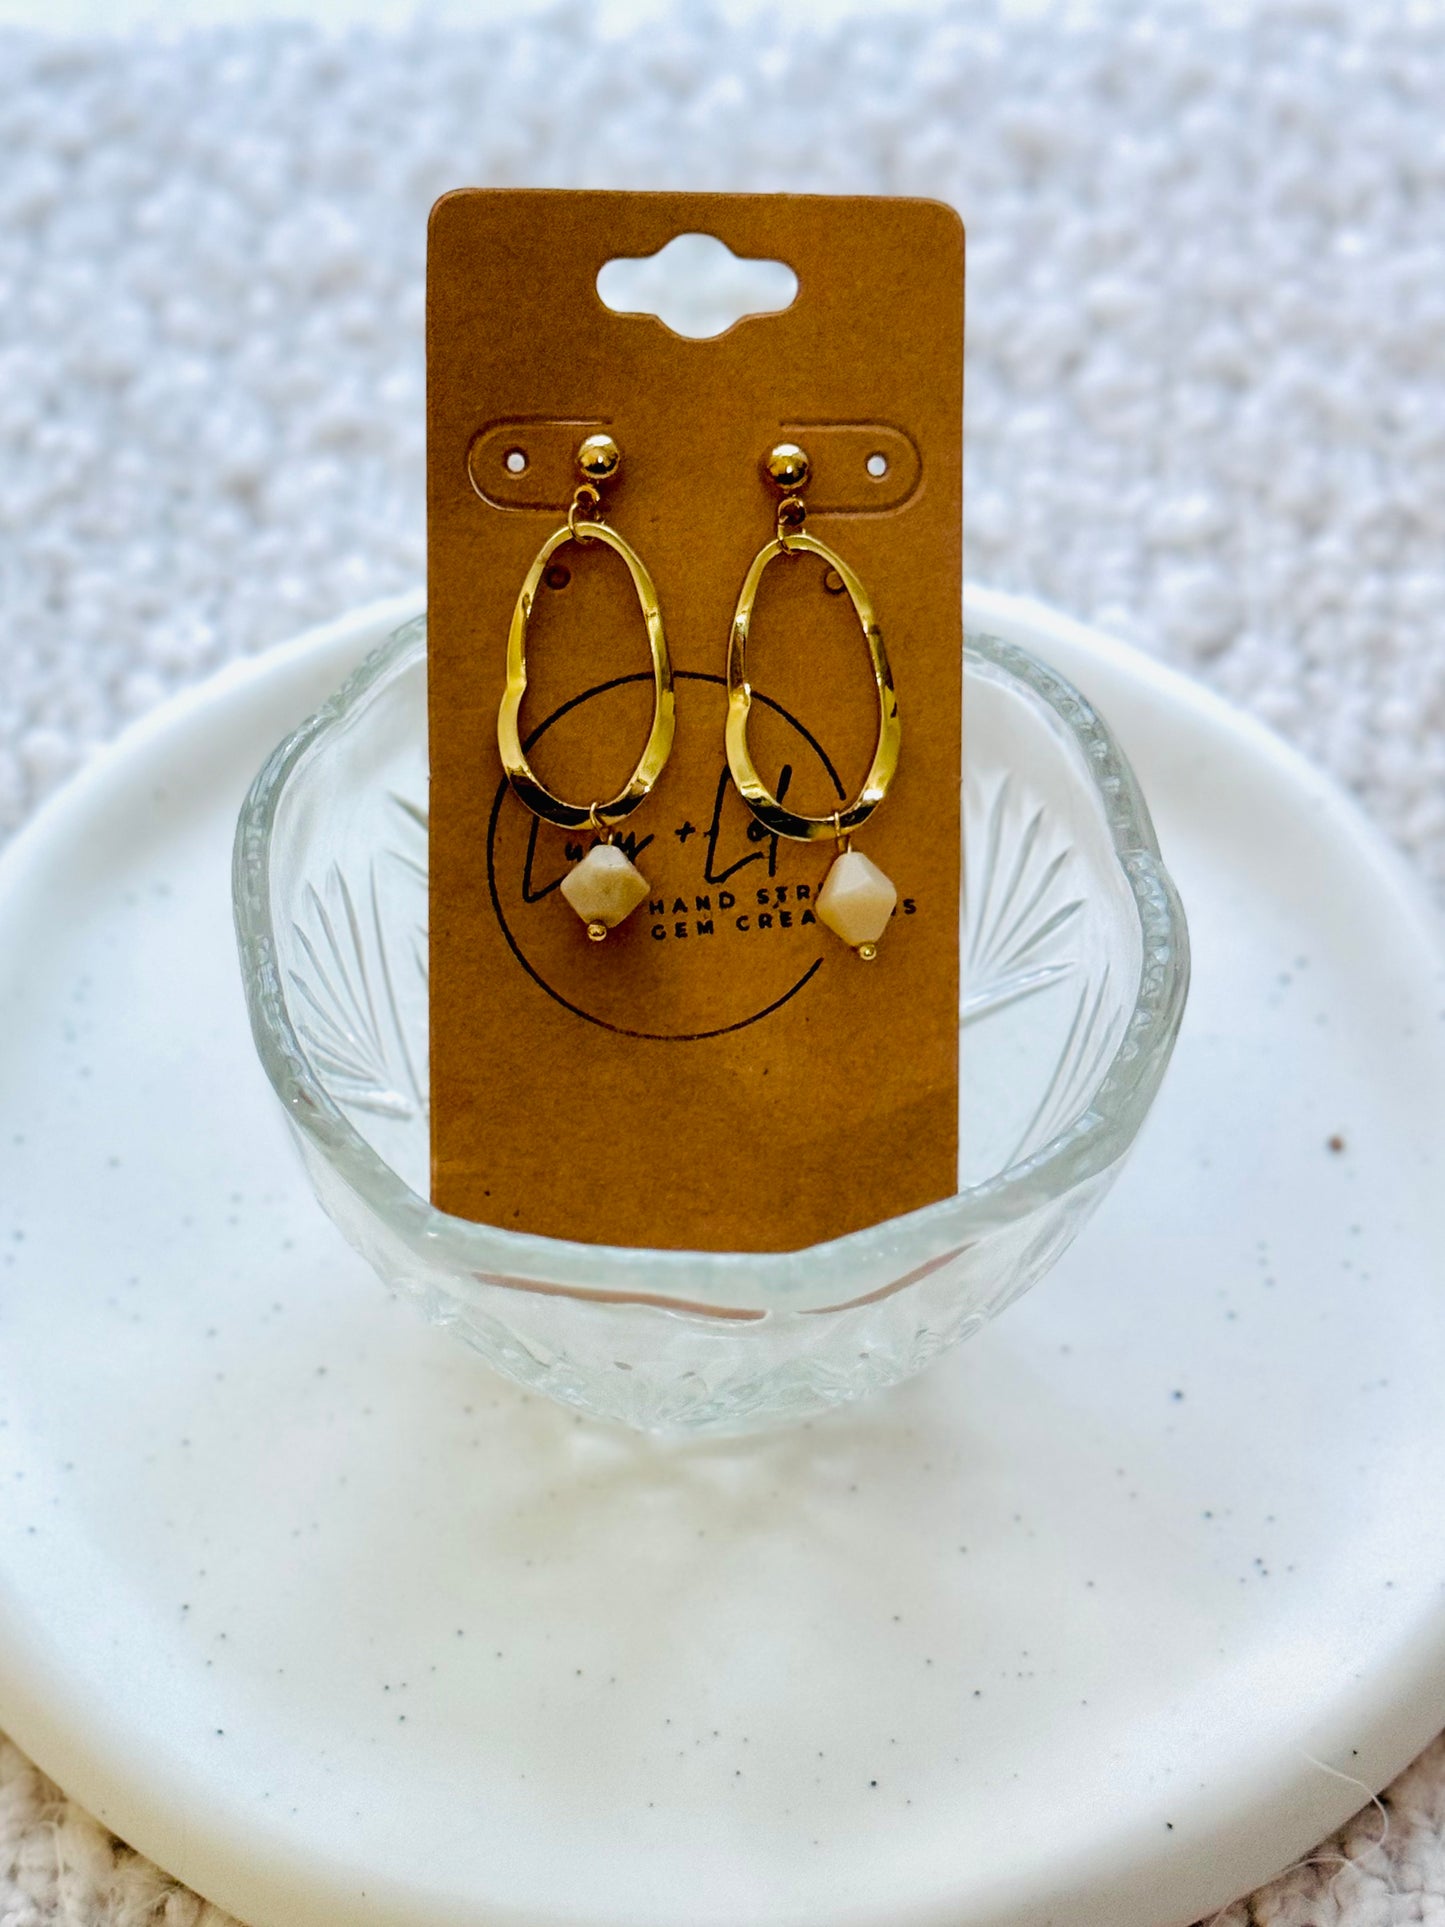 African Opal + Gold Oval Post Earrings